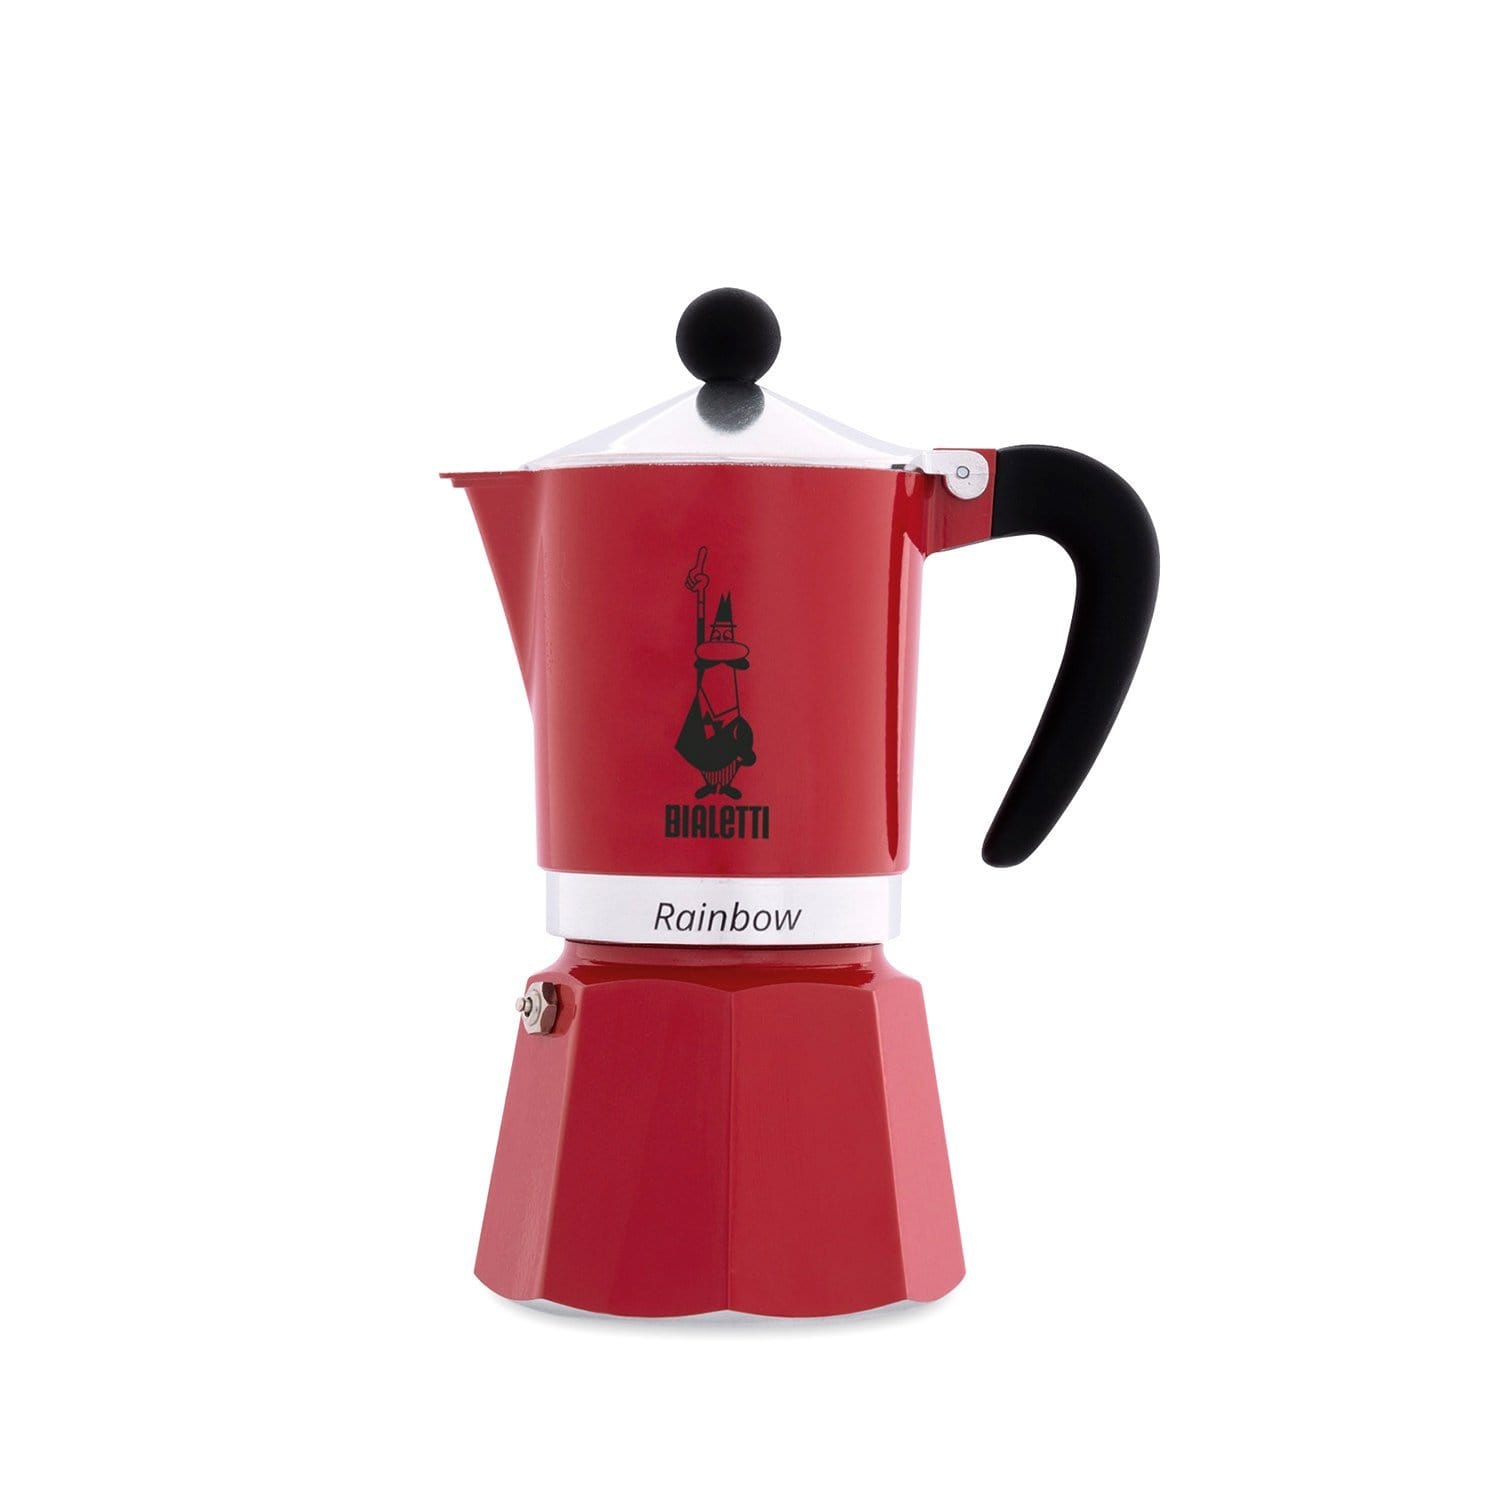 Bialetti Rainbow Coffee Maker - Red , 6 Cups - 4963 - Jashanmal Home